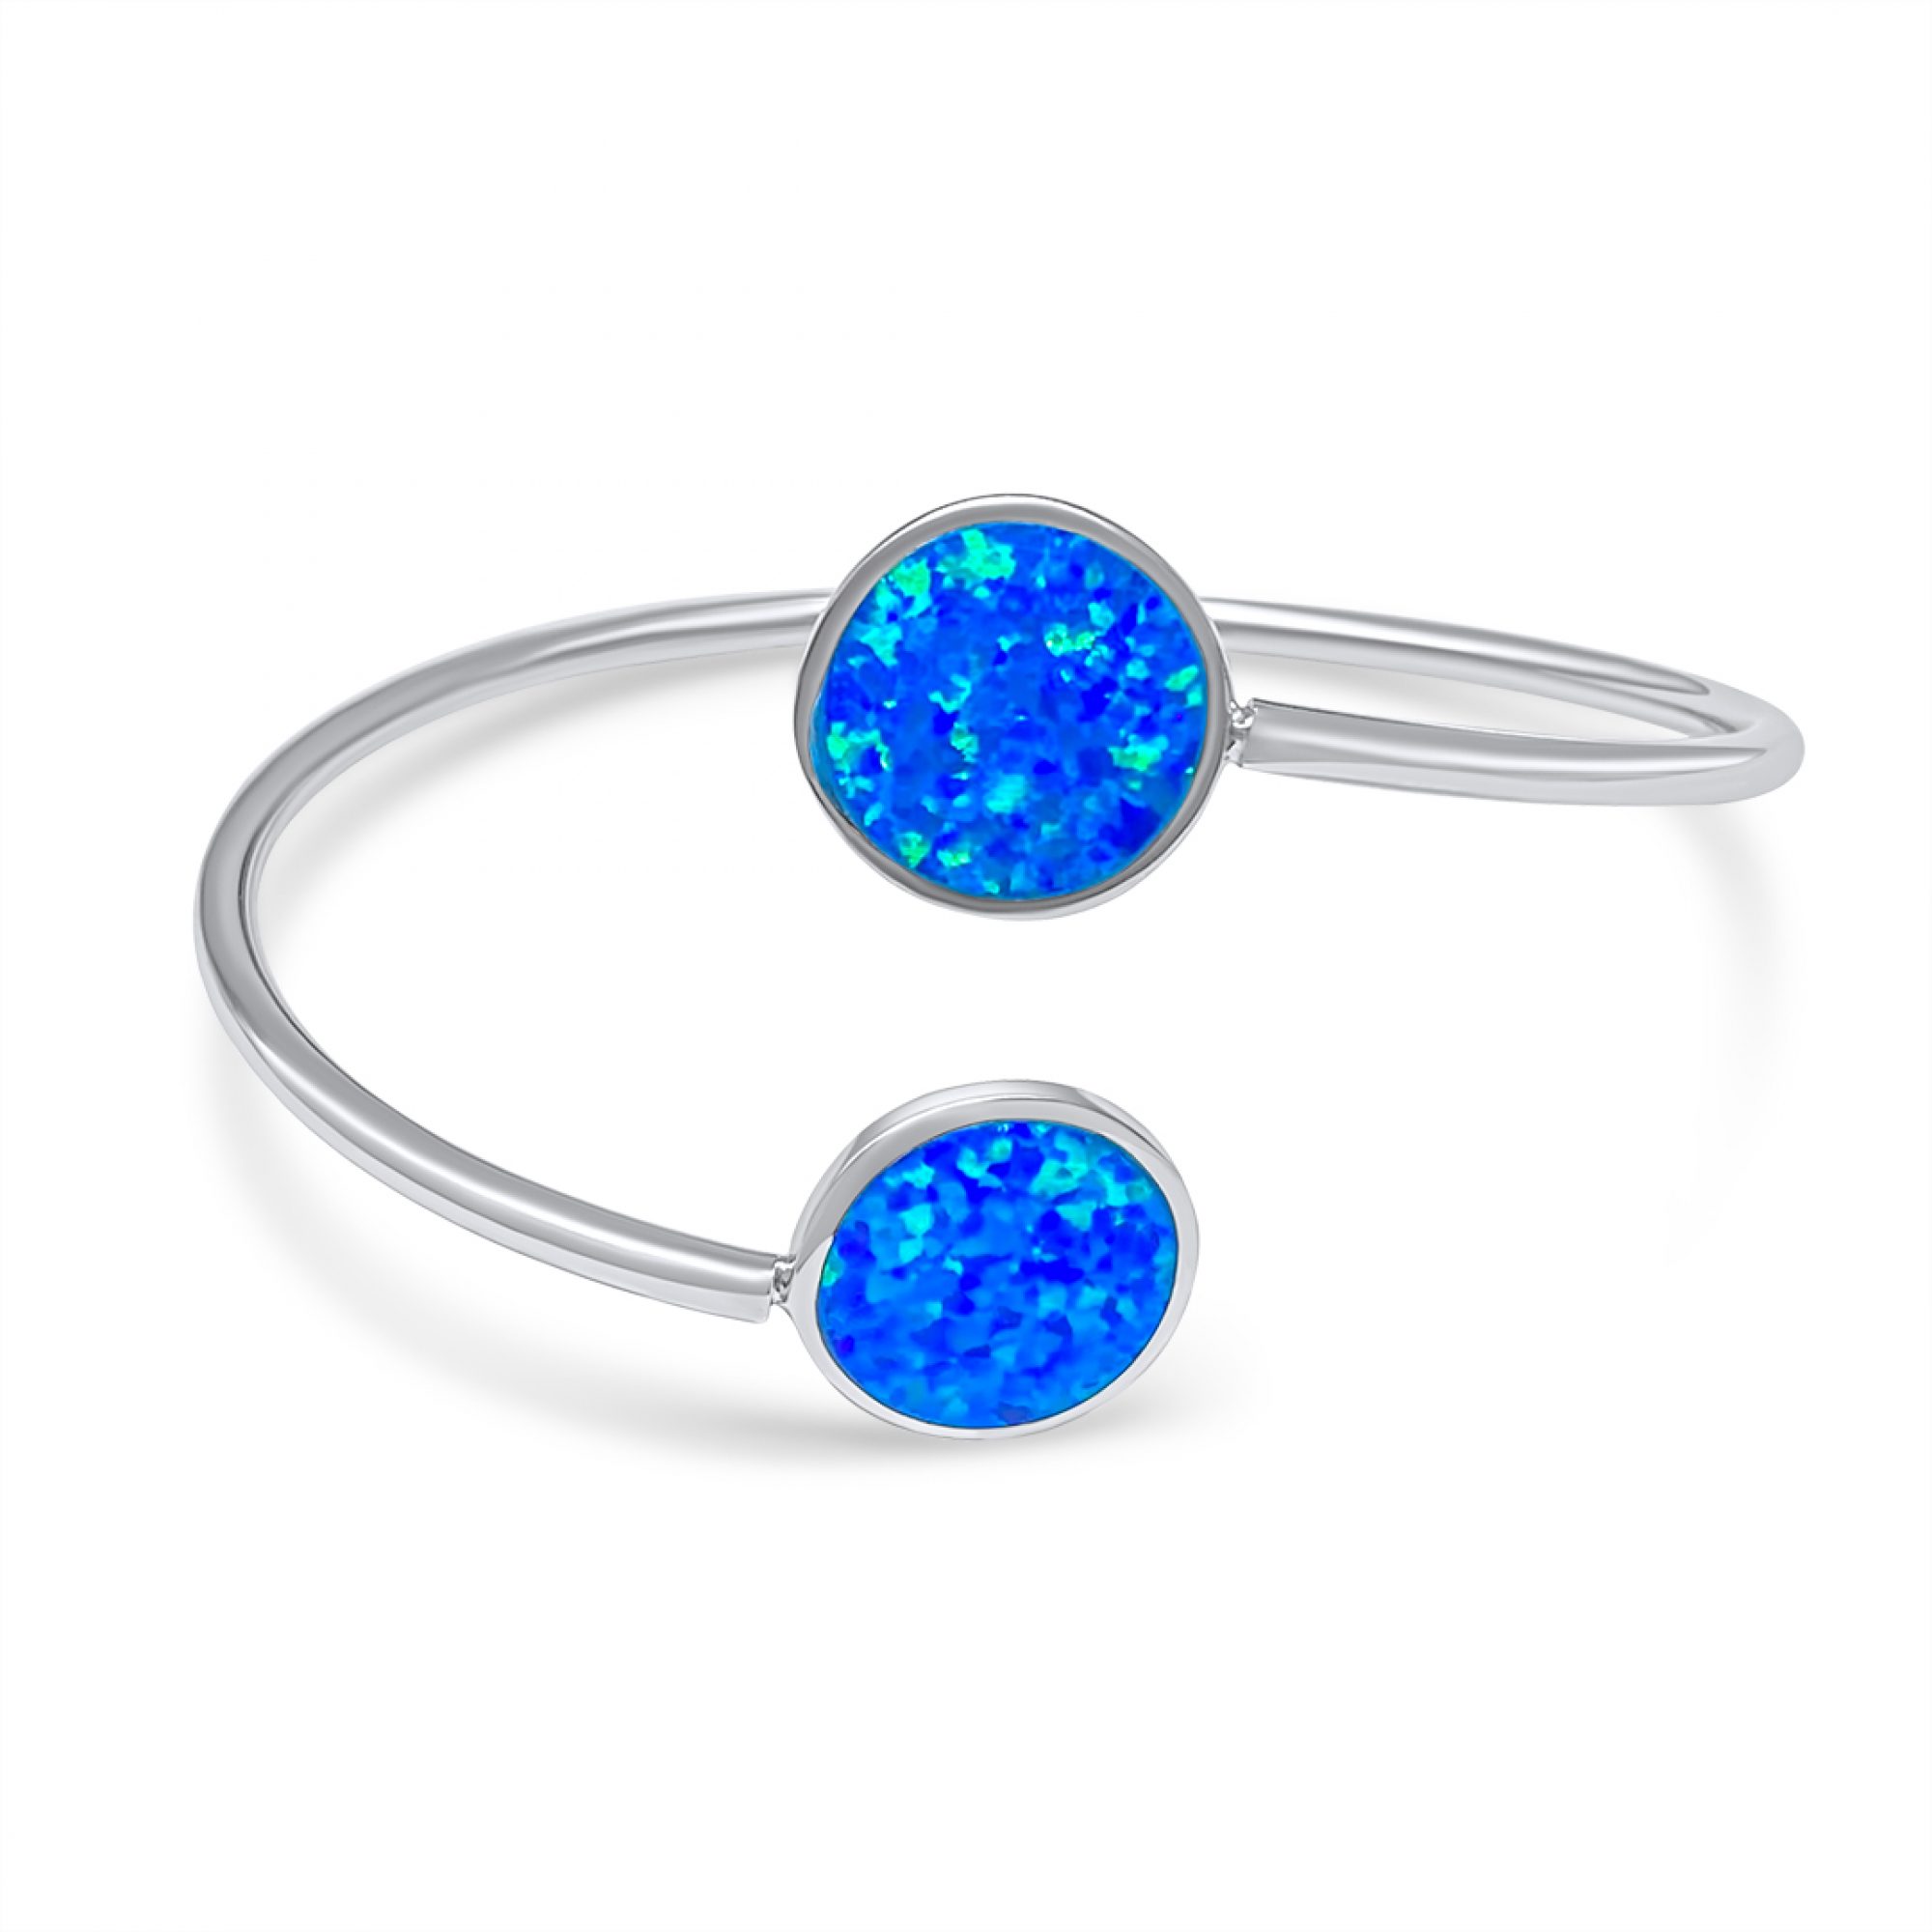 Bracelet with opal stones